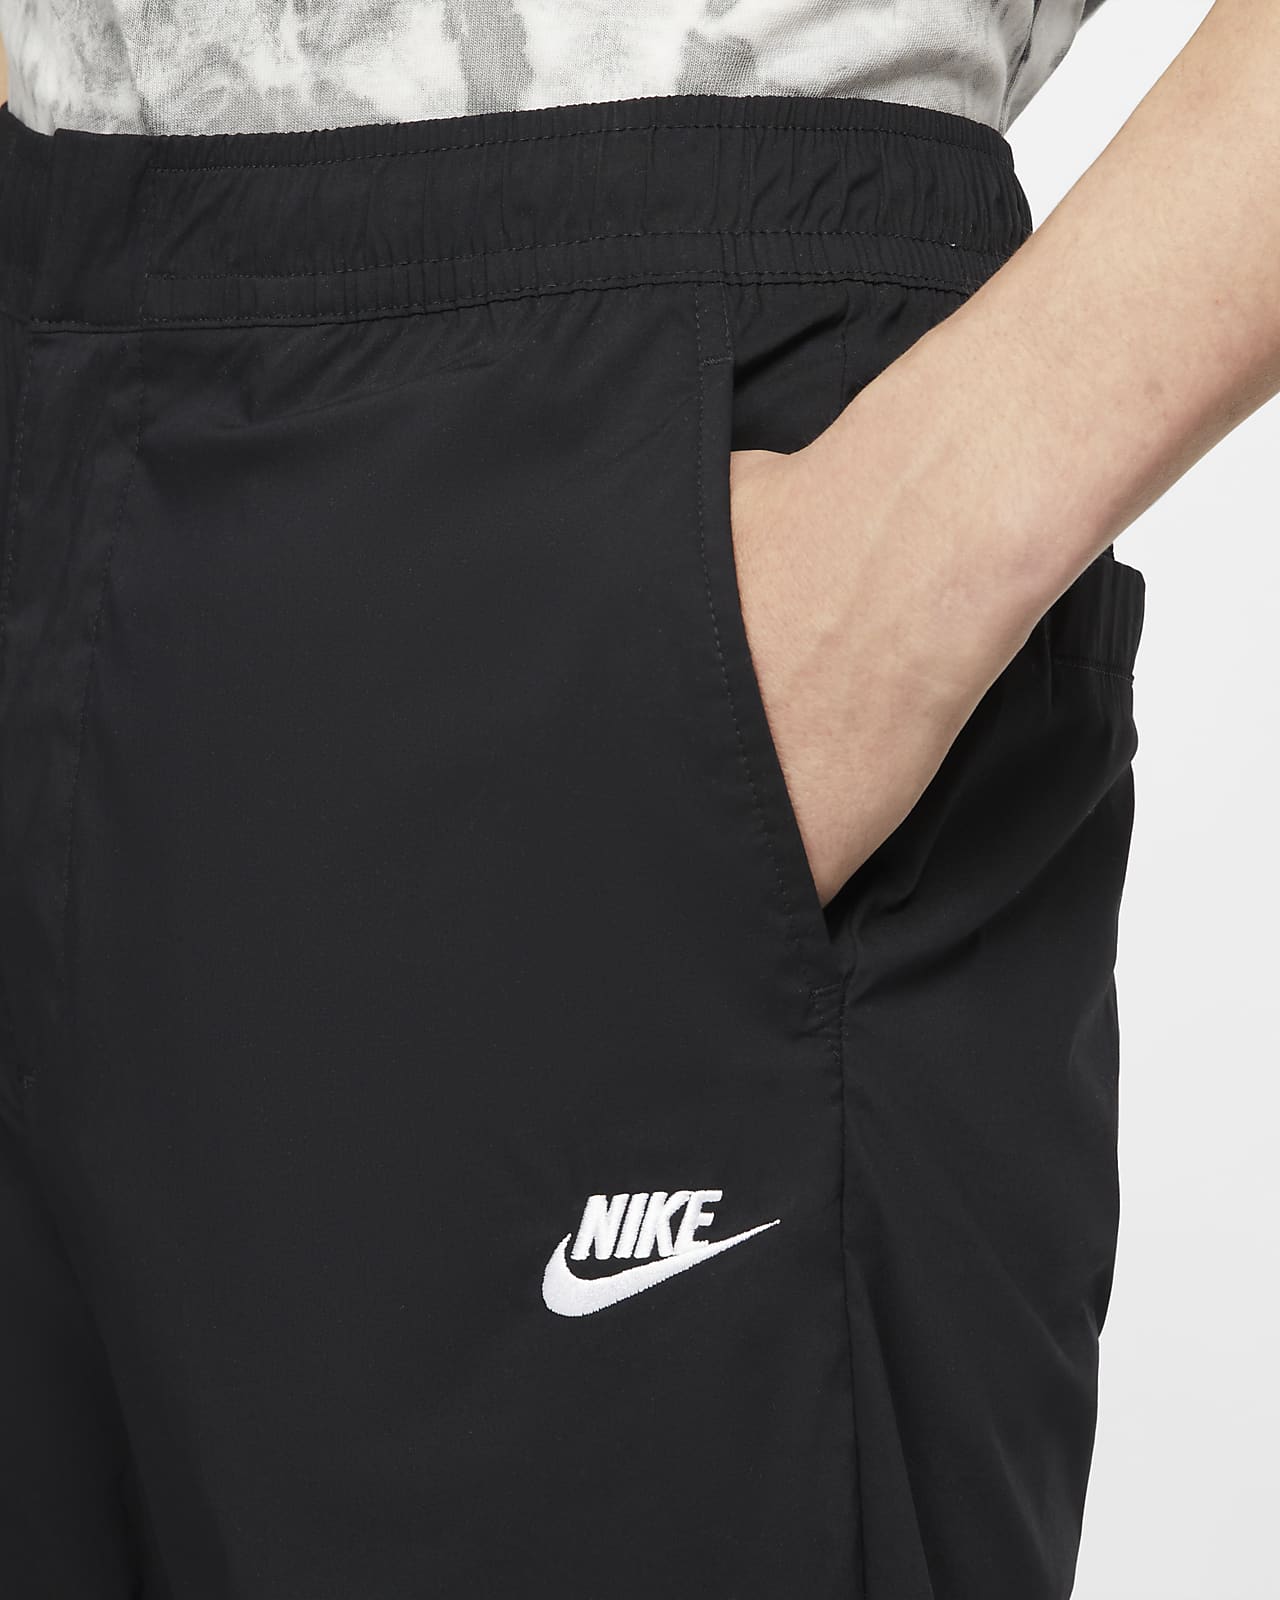 Buy Nike Womens Skinny Casual Pants DD5583437 THUNBLWhite at Amazonin